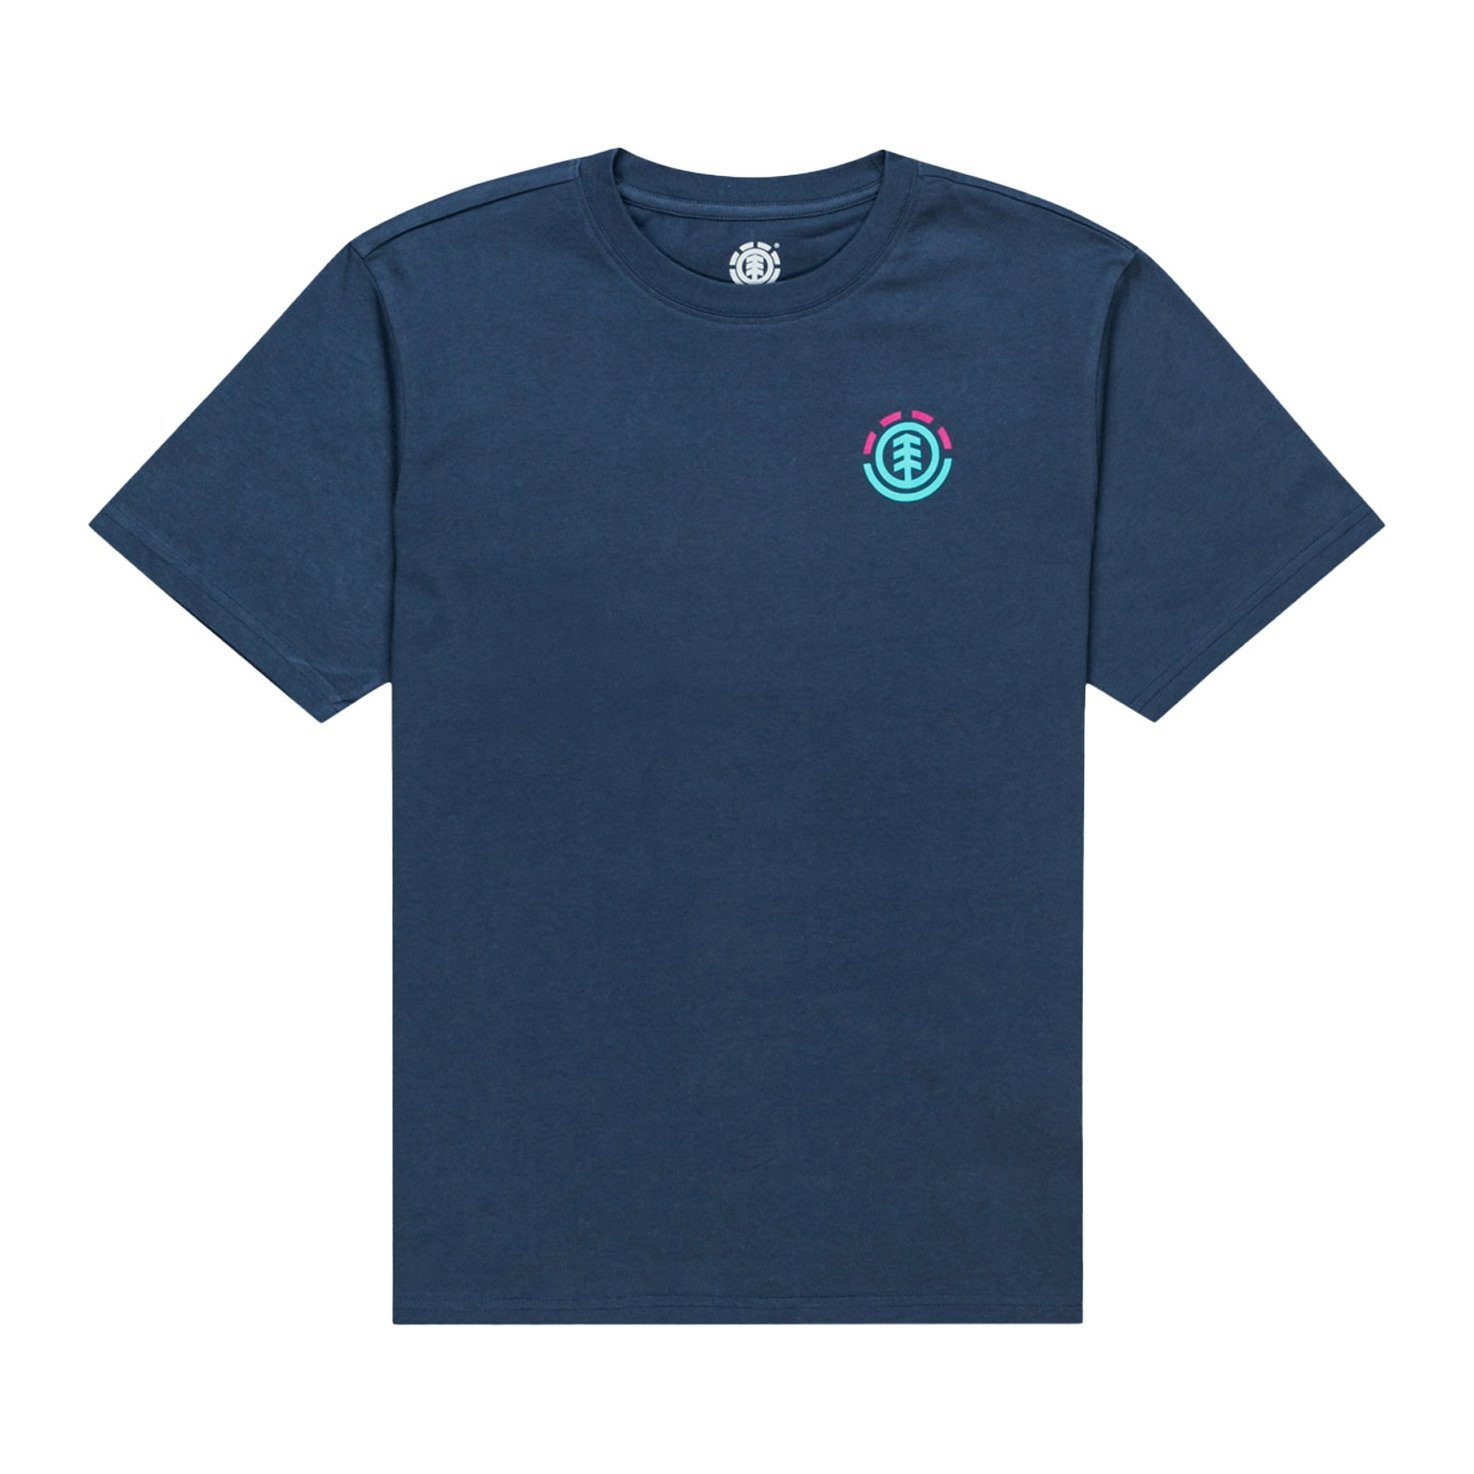 Hills Midnight T-Shirt Navy Element